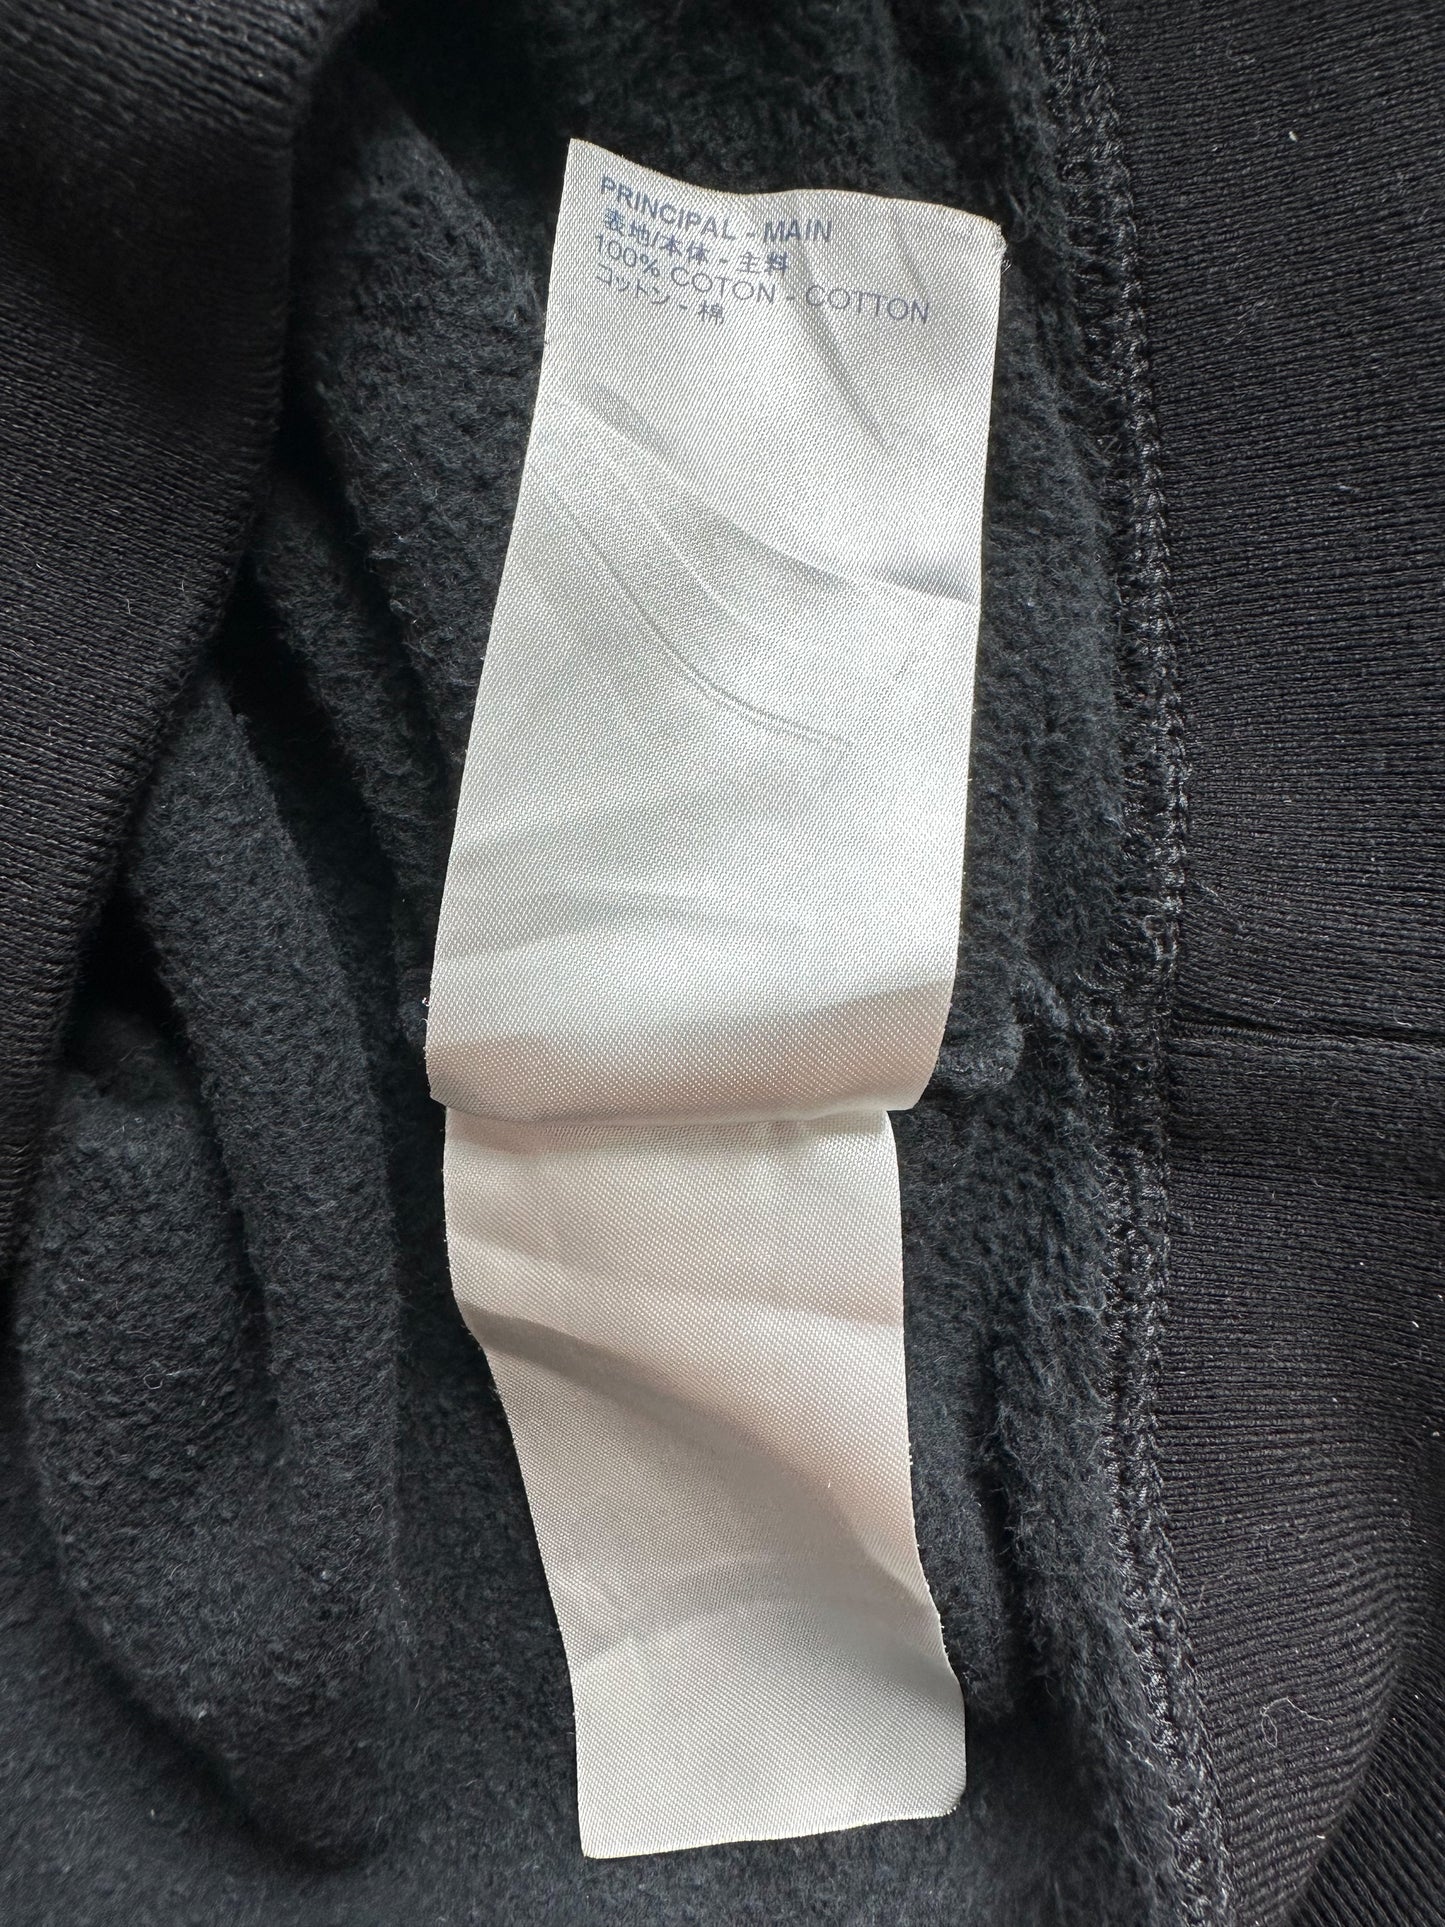 Louis Vuitton, Shirts, Louis Vuitton Reflective Sleeves Gravity Hoodie